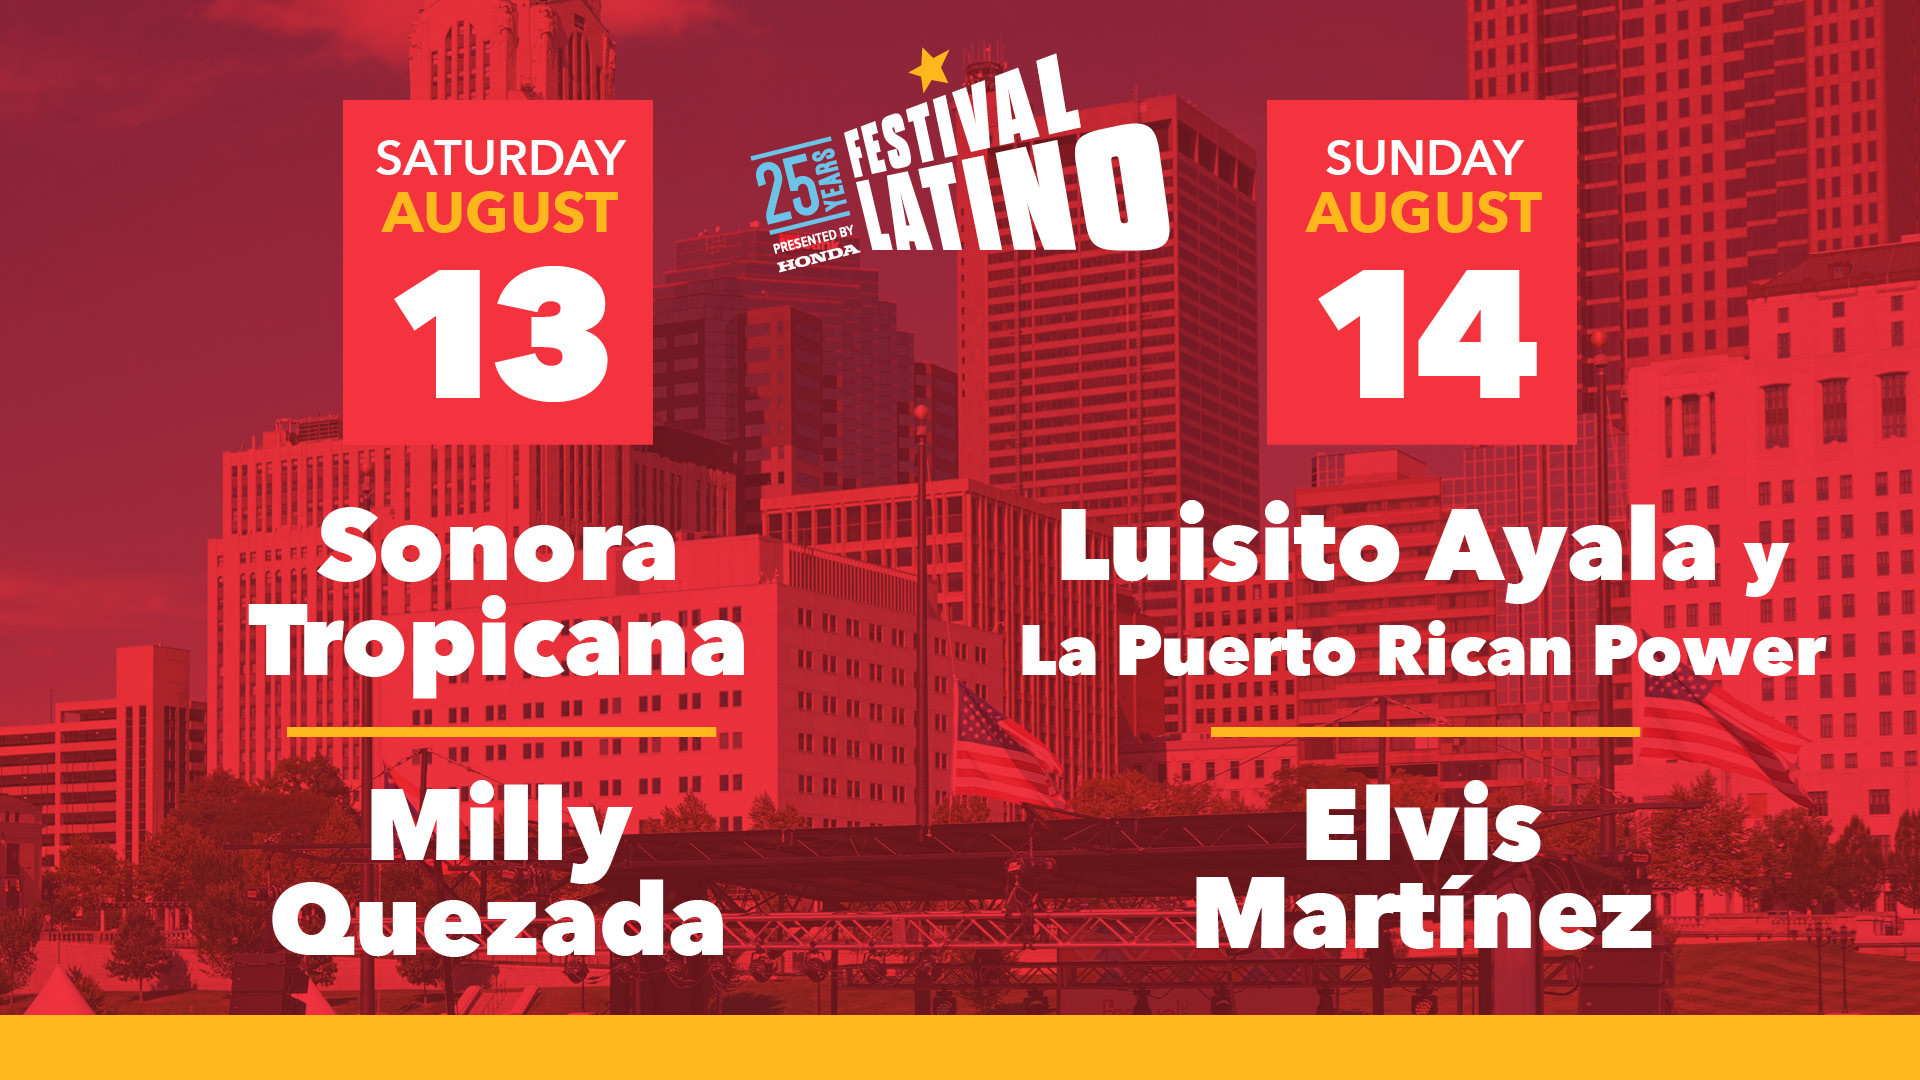 Home ¡Festival Latino!